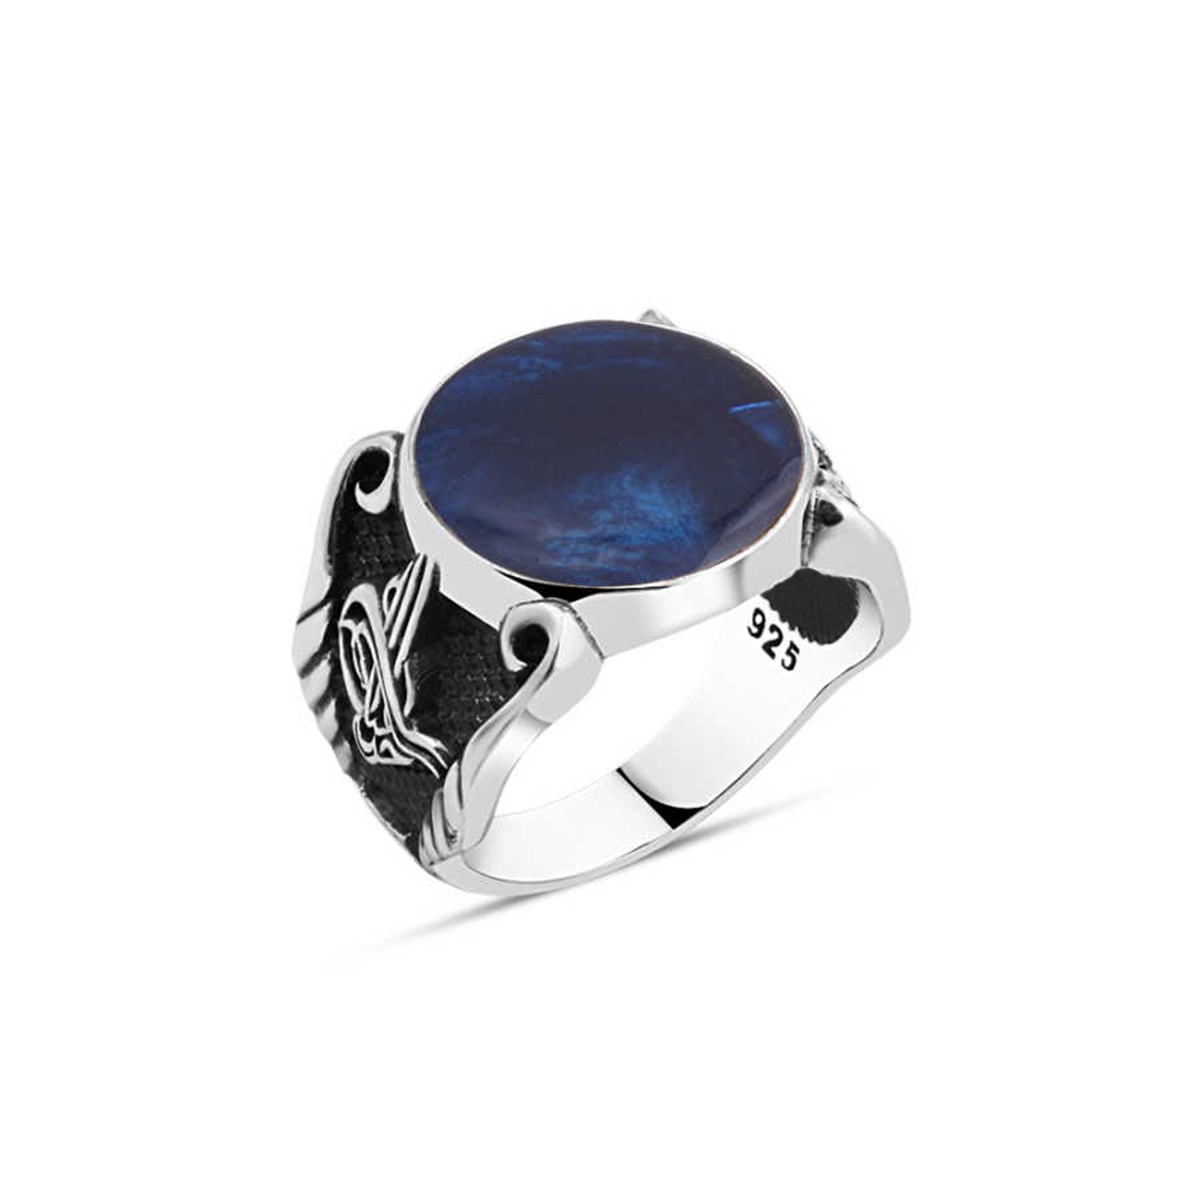 Blue Enamel Sterling Silver Men's Ring